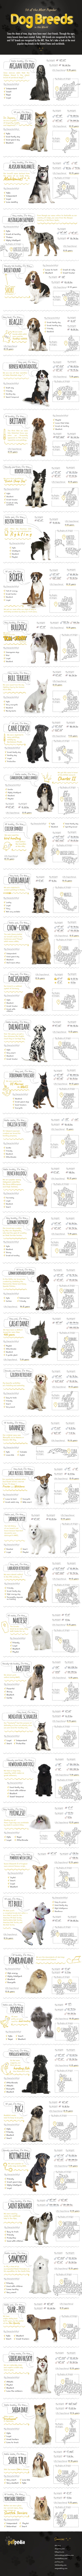 50 Most Popular Dog Breeds (Infographic)